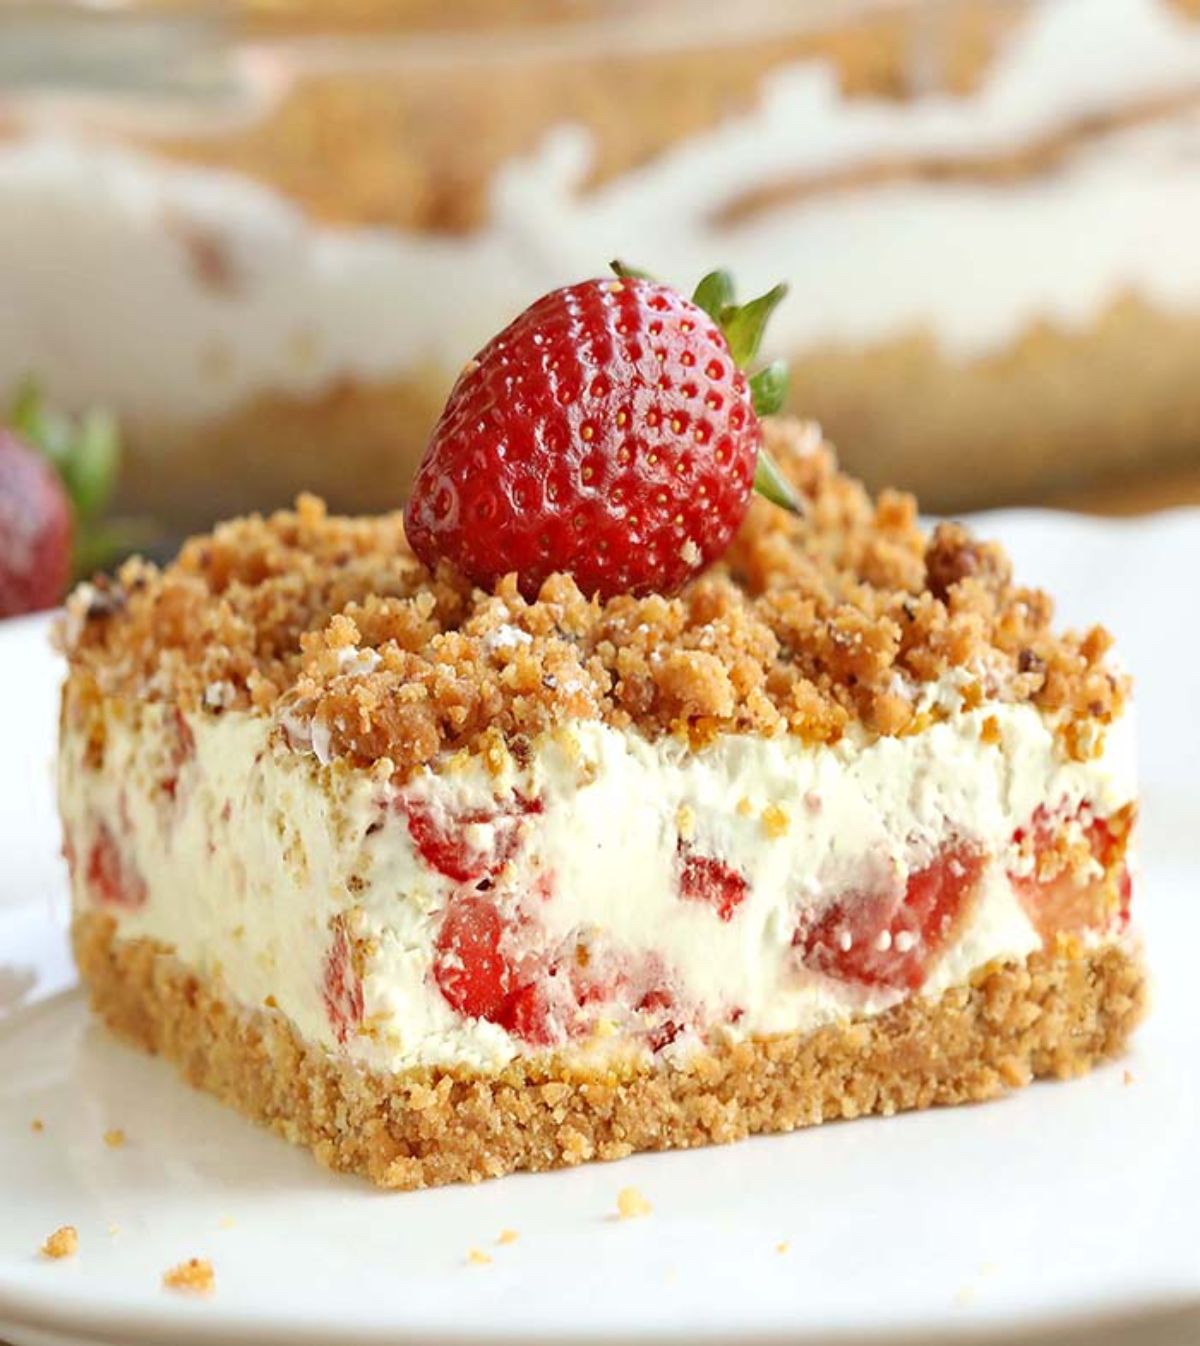 Scrumptious frozen strawberries and cream dessert on a white plate.